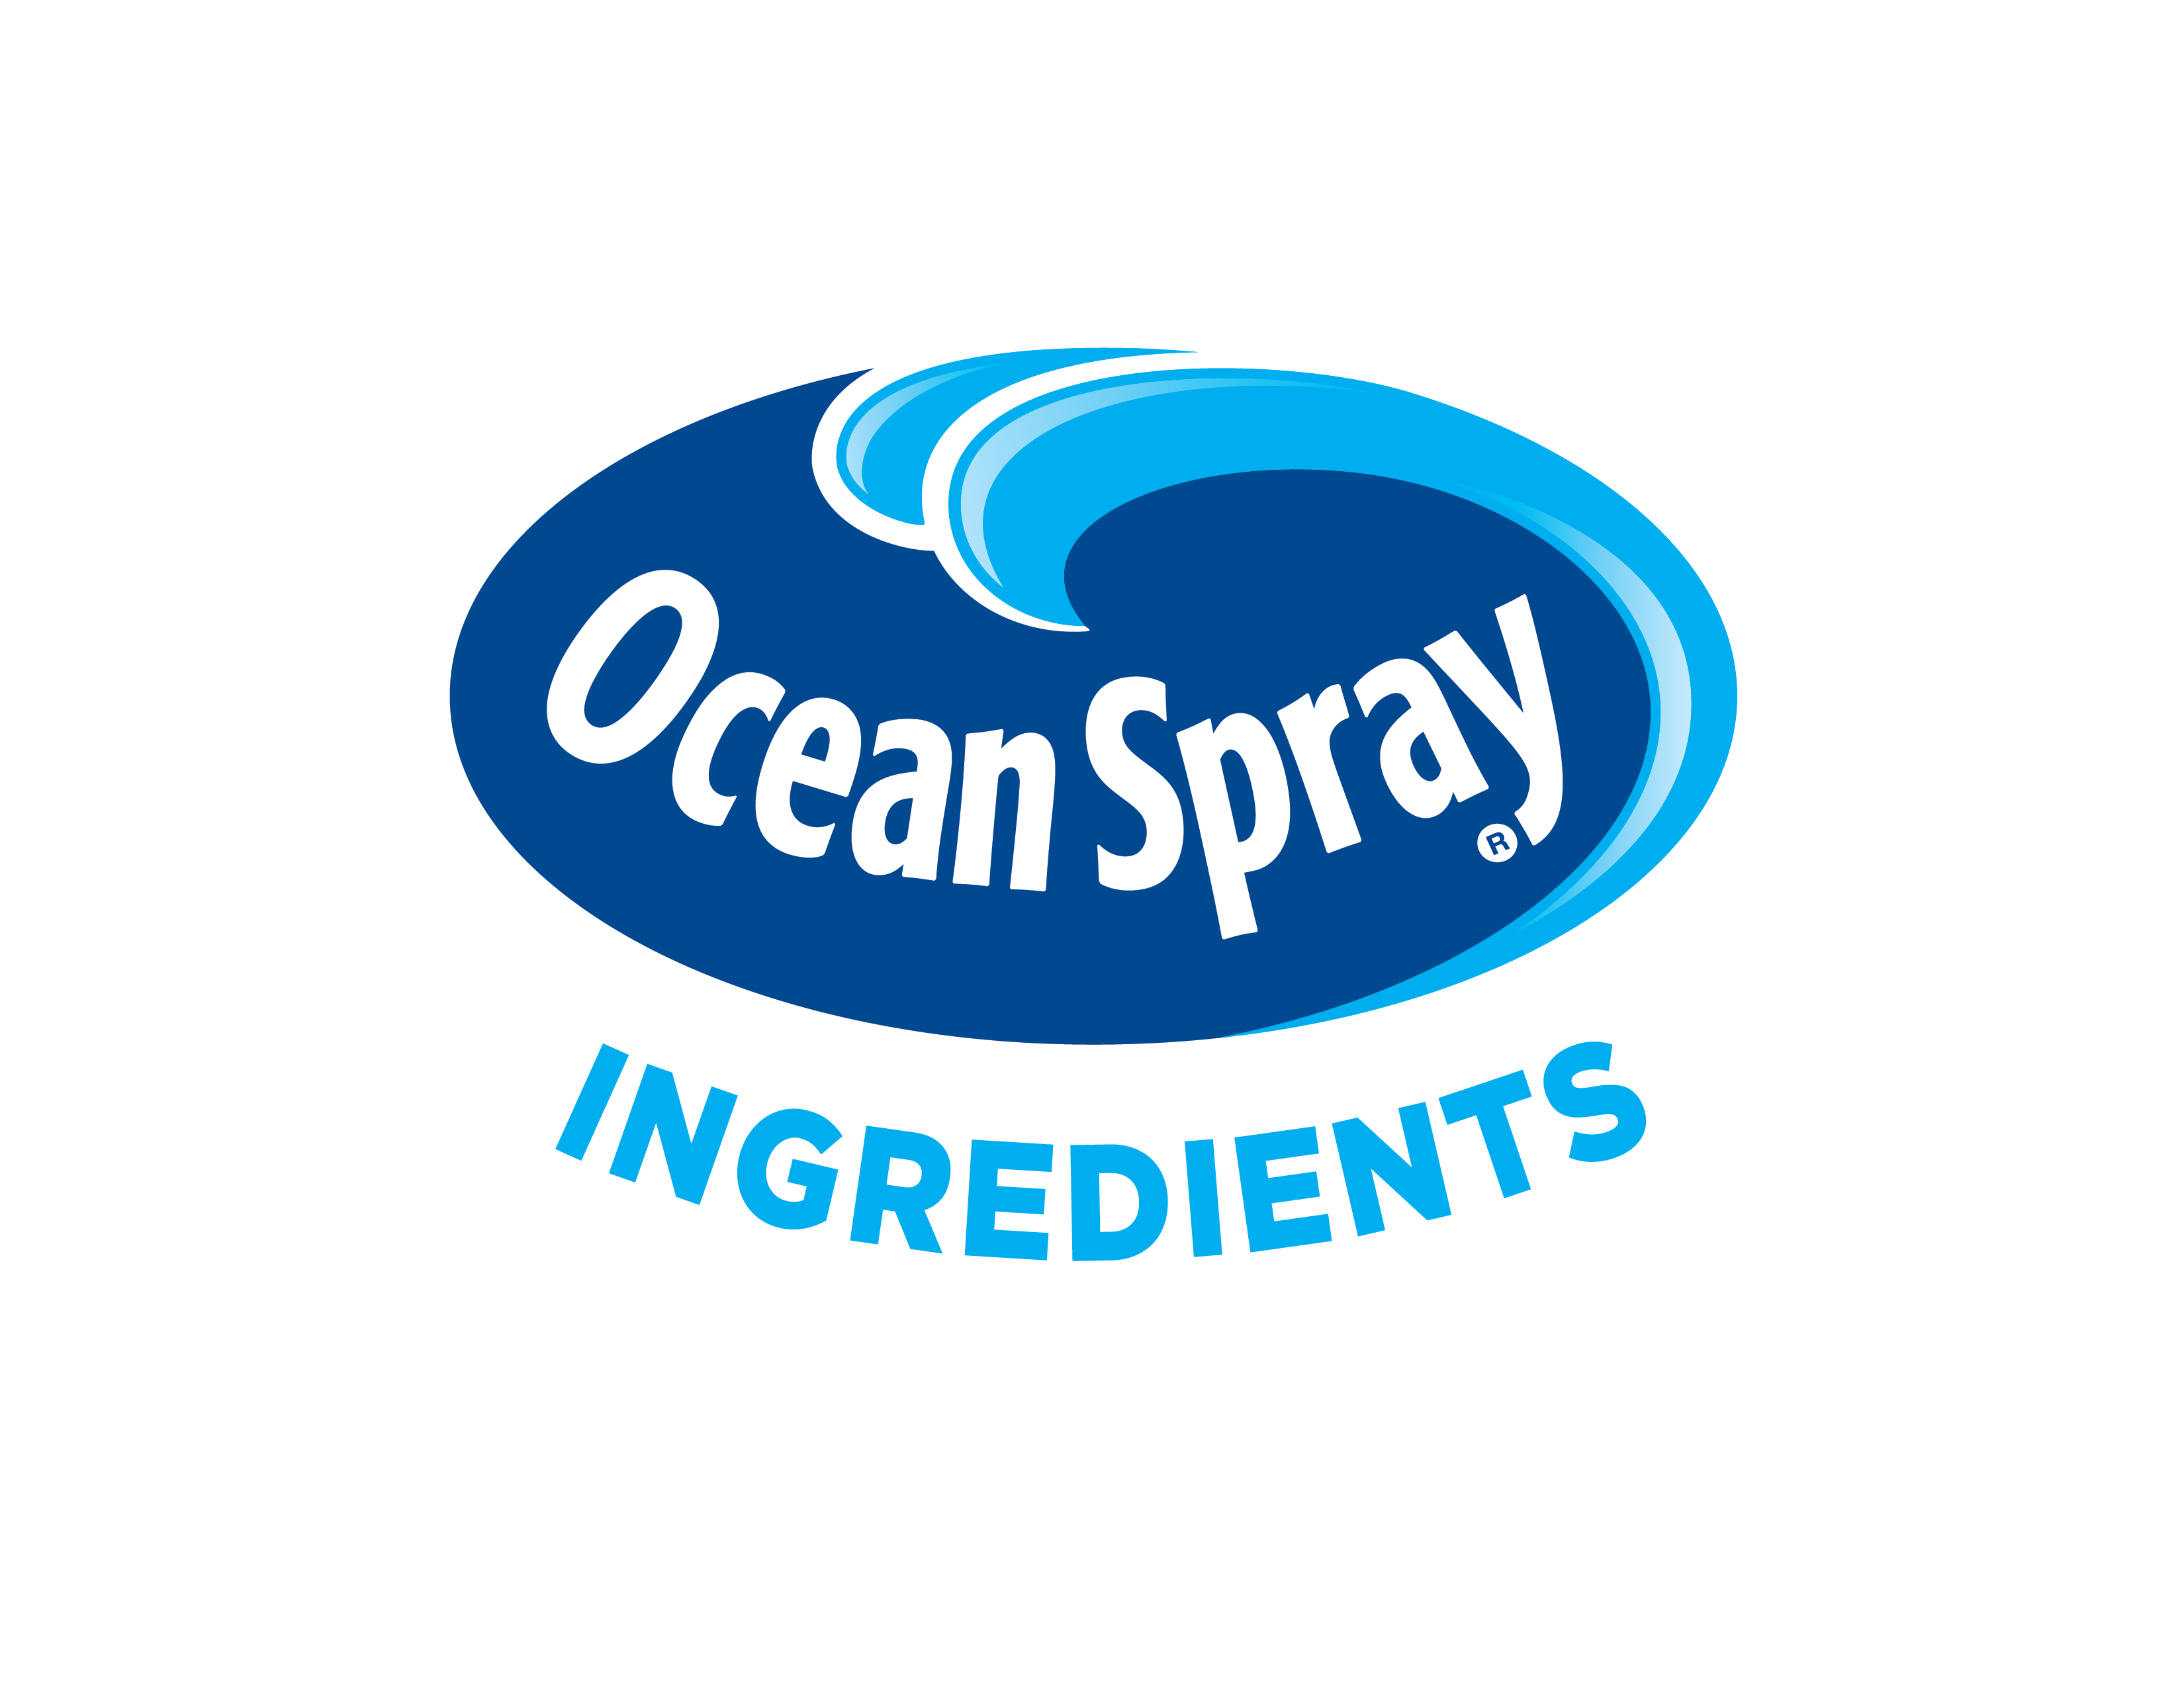 Ocean Spray Ingrédients Logo